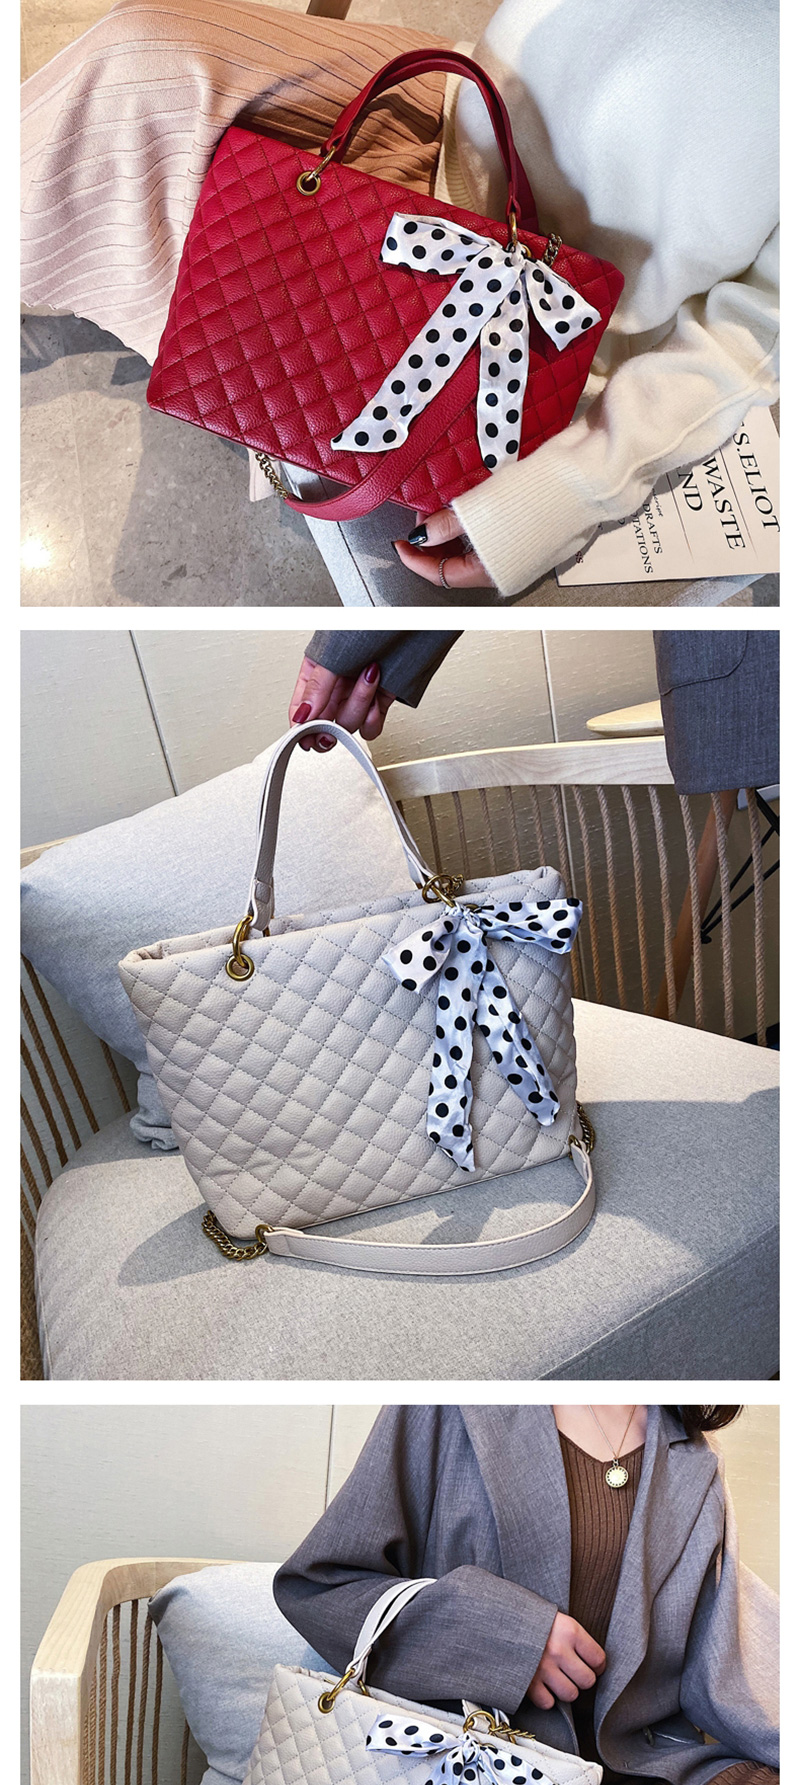 Fashion Black Lingge Chain Scarf Single Shoulder Messenger Handbag,Handbags